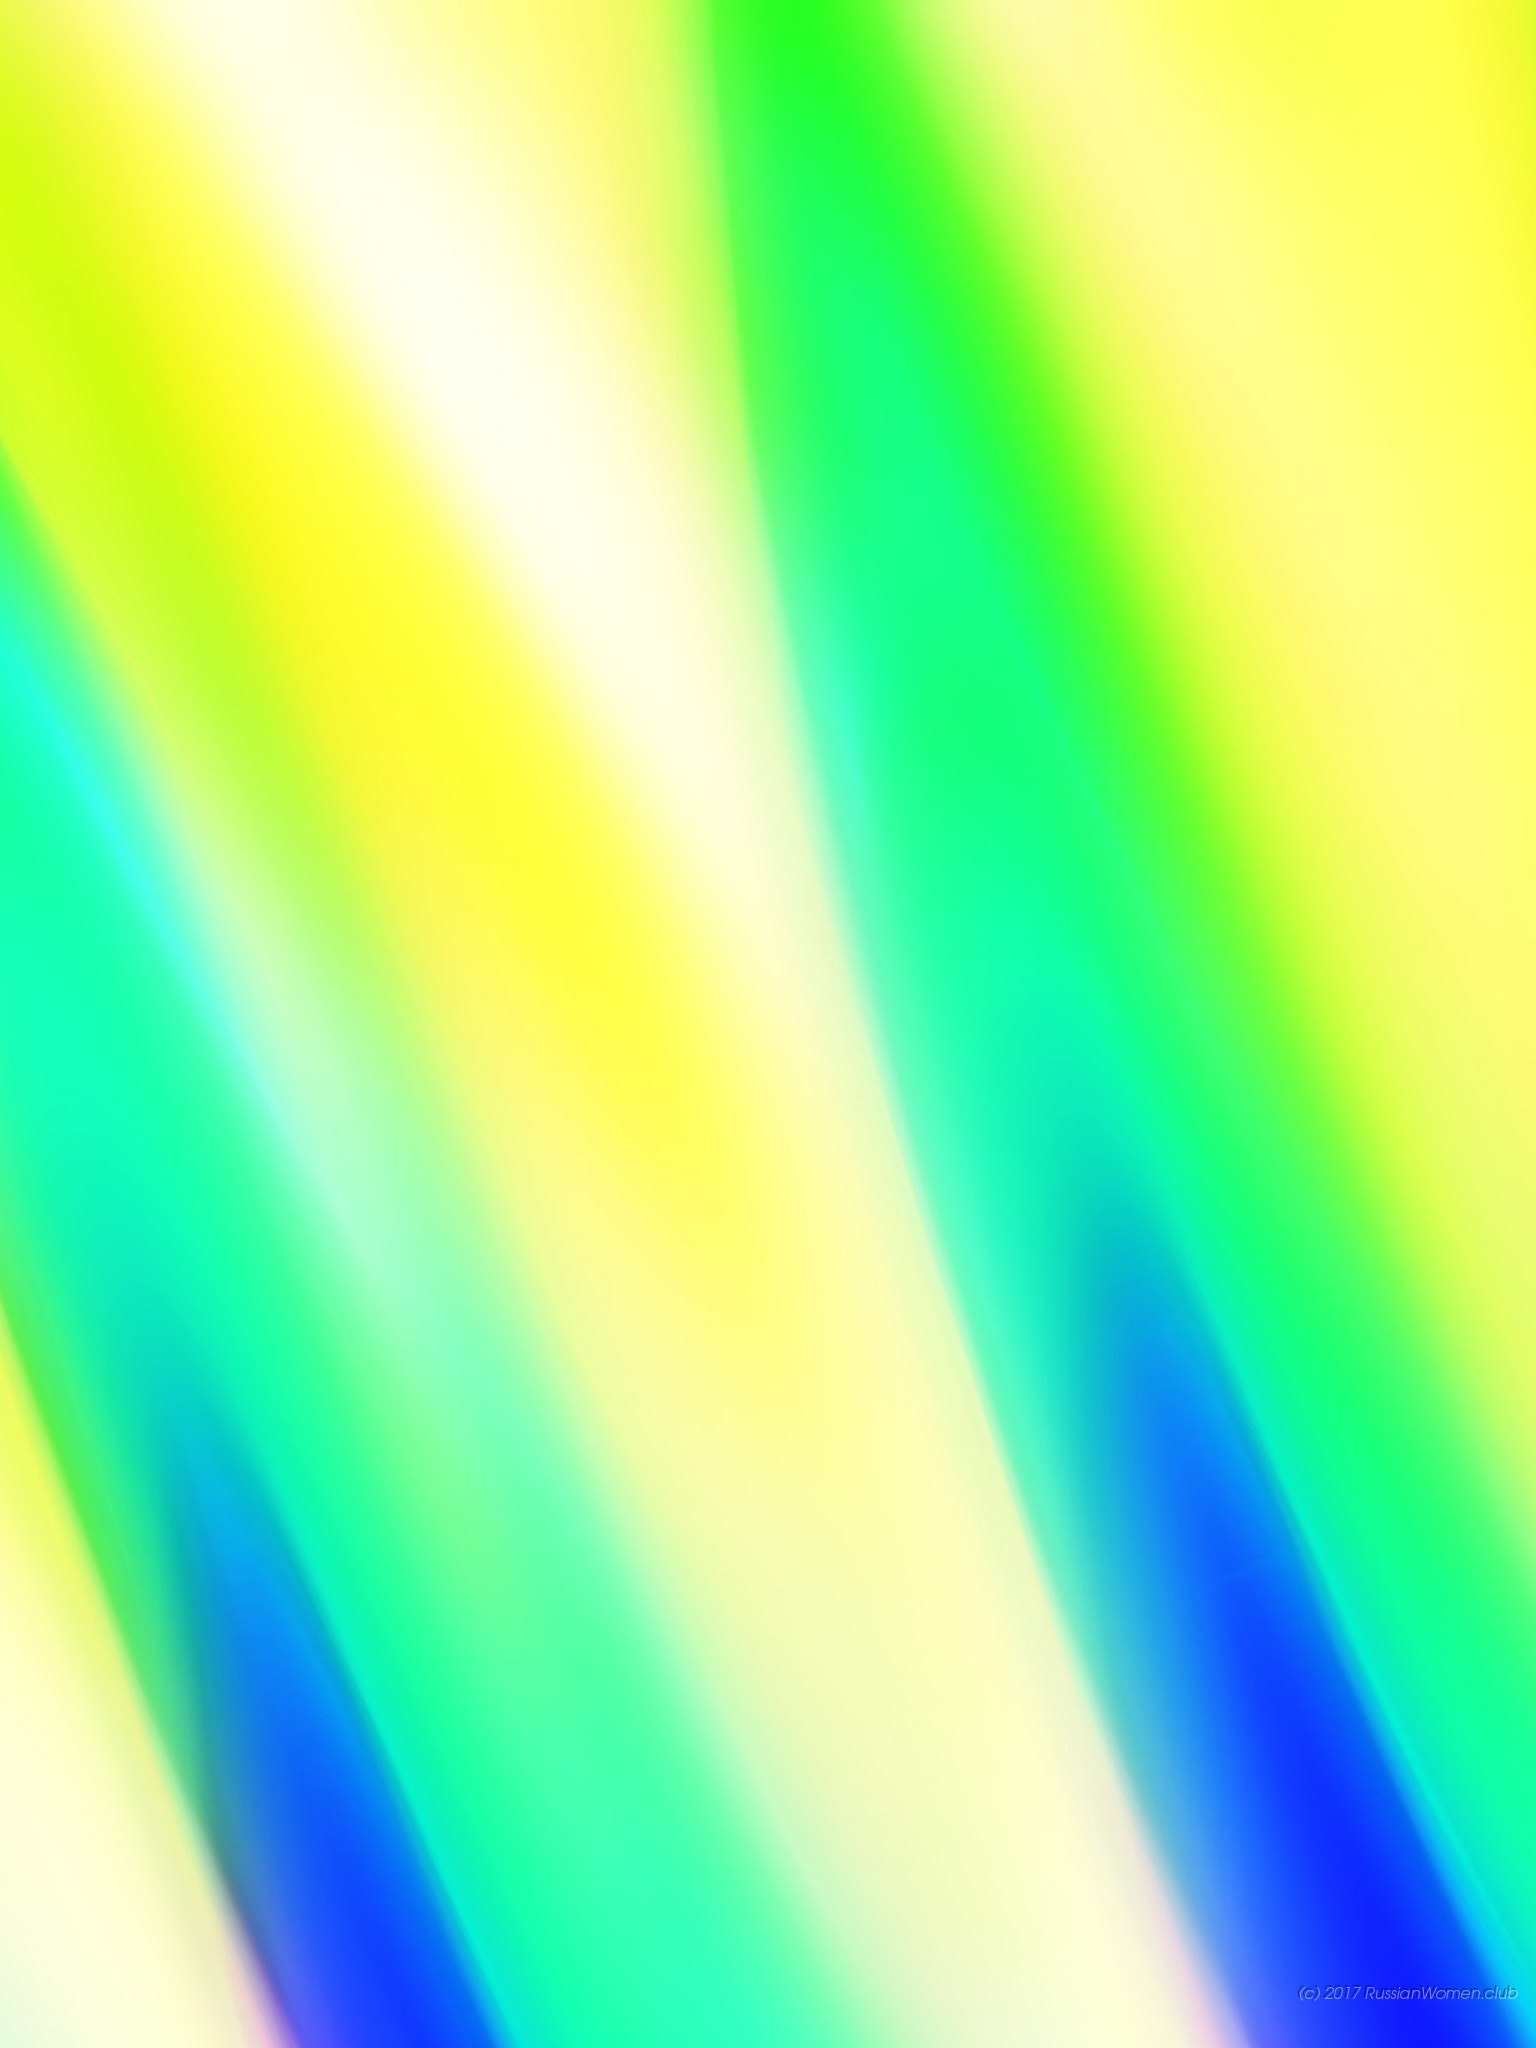 nokia 220 wallpaper,blu,verde,giallo,leggero,acqua